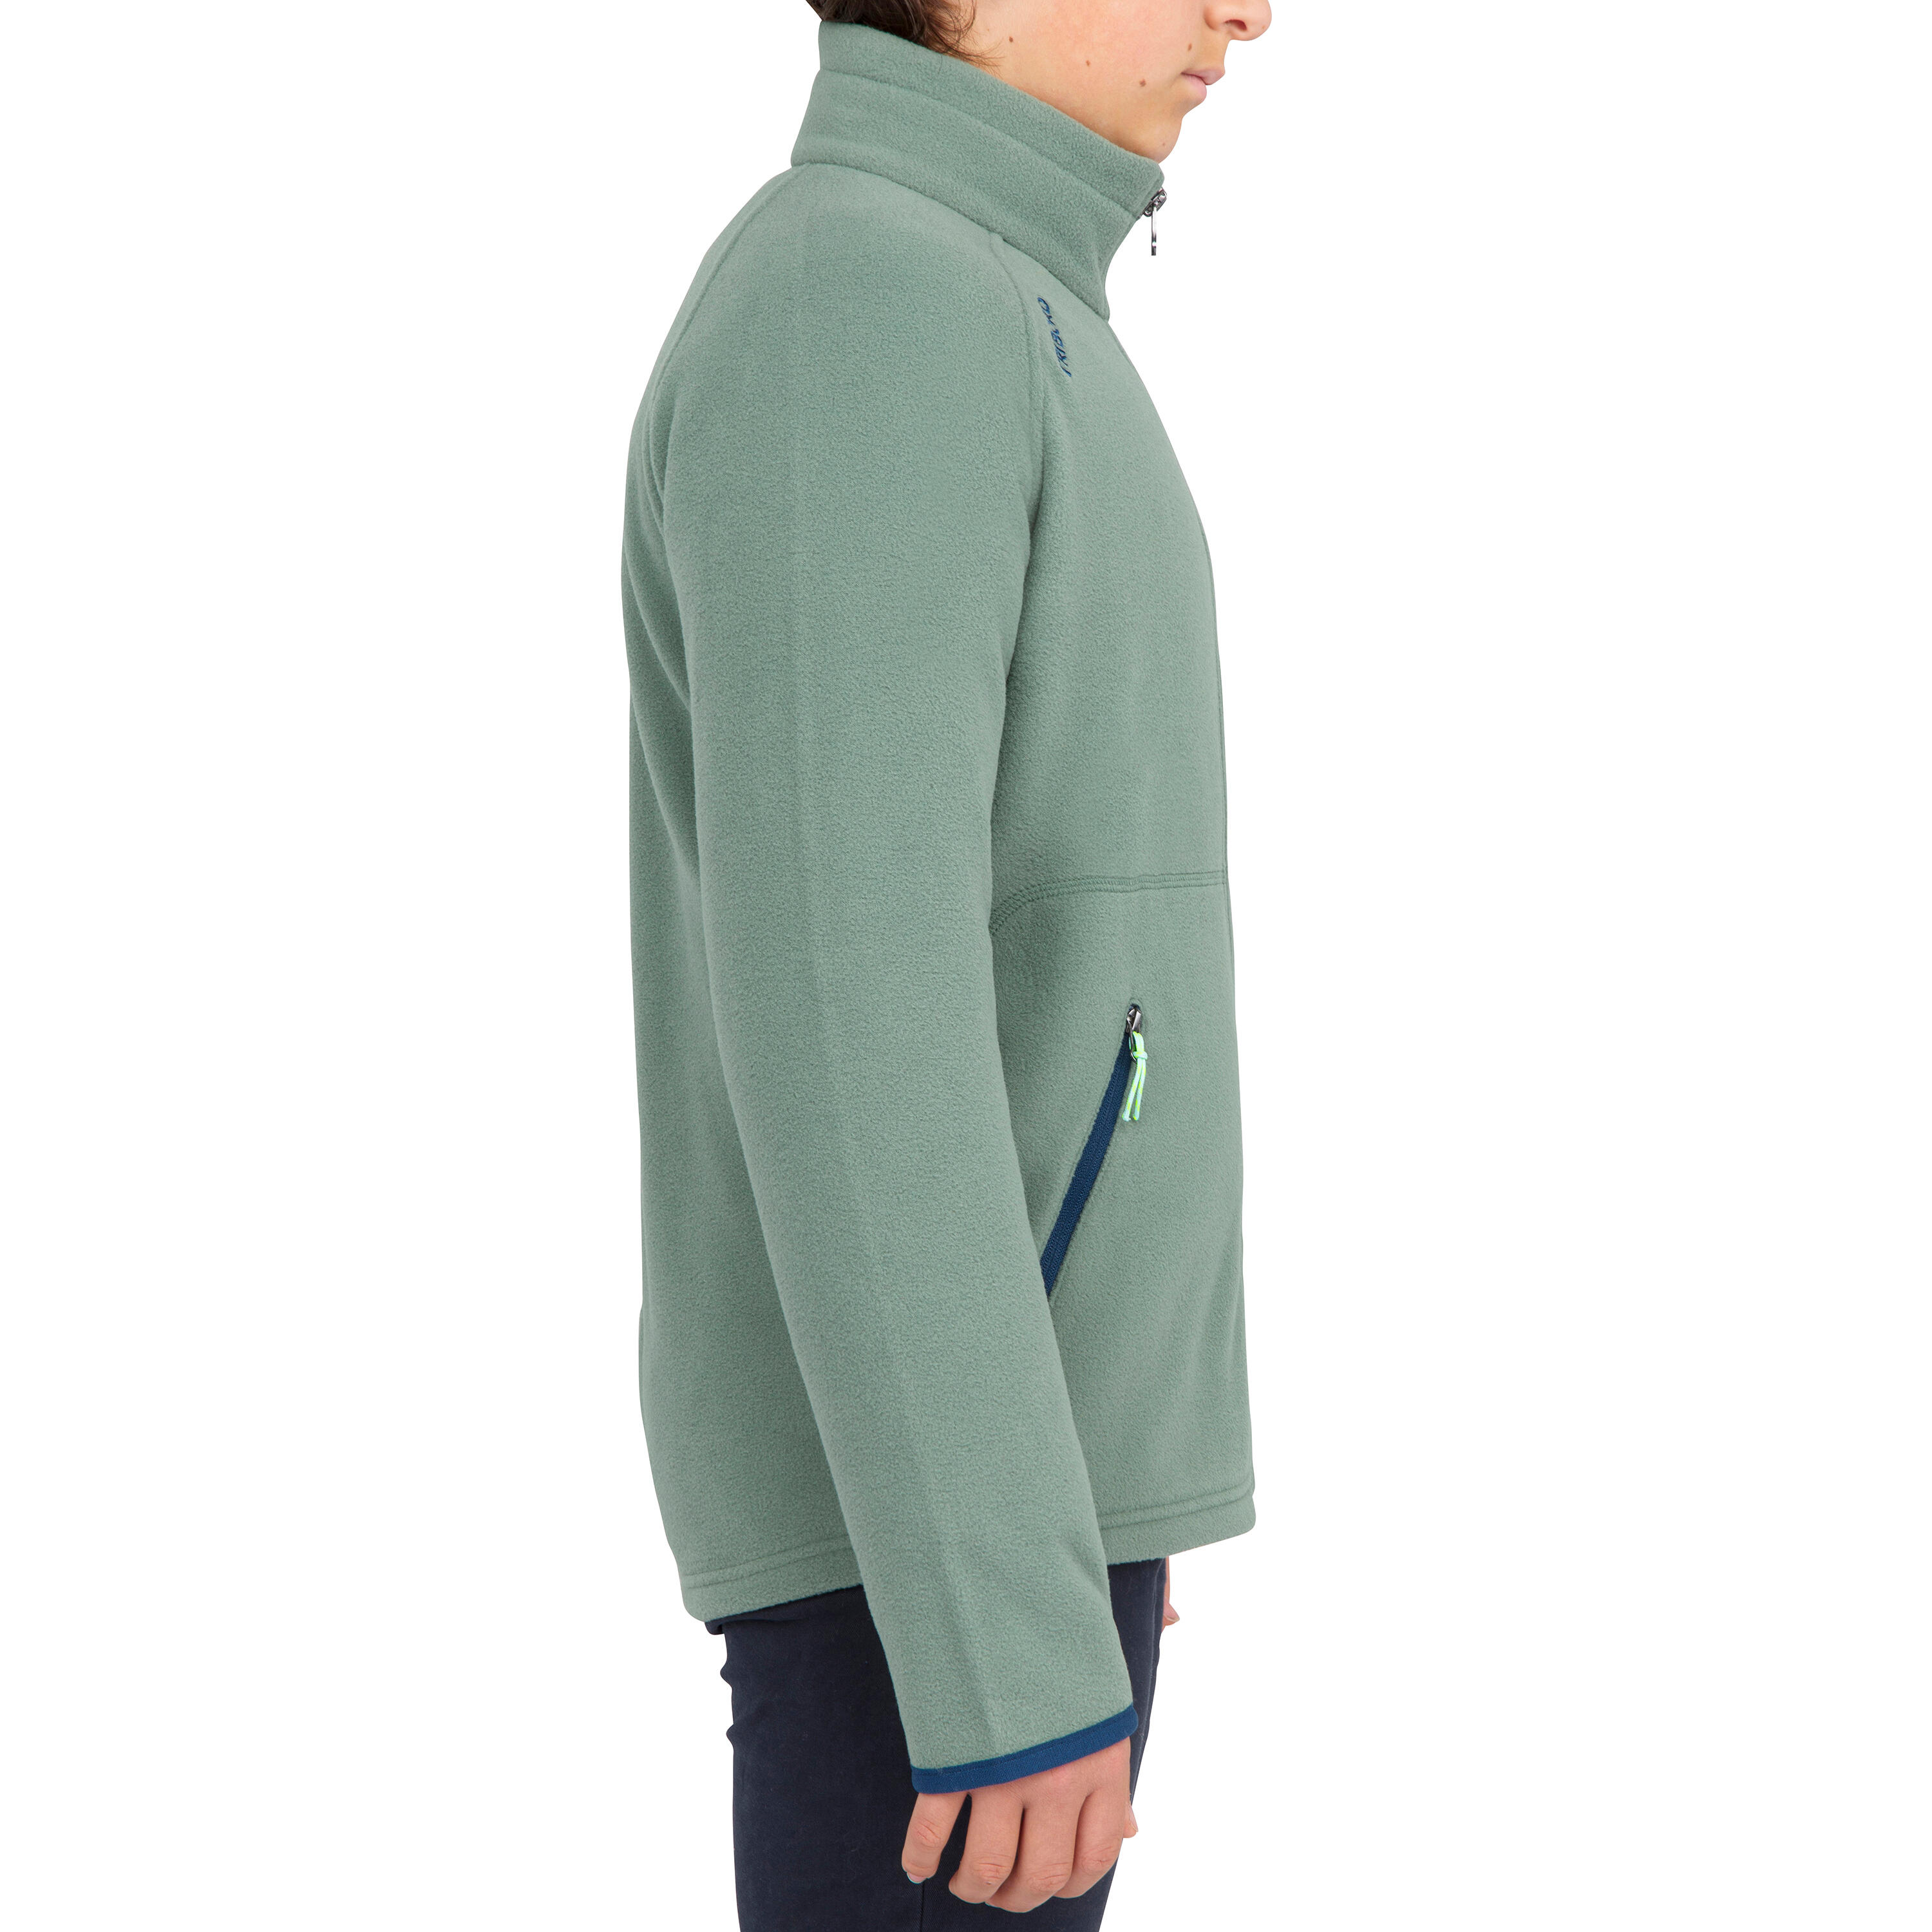 Kids warm fleece sailing jacket 100 - khaki 3/10